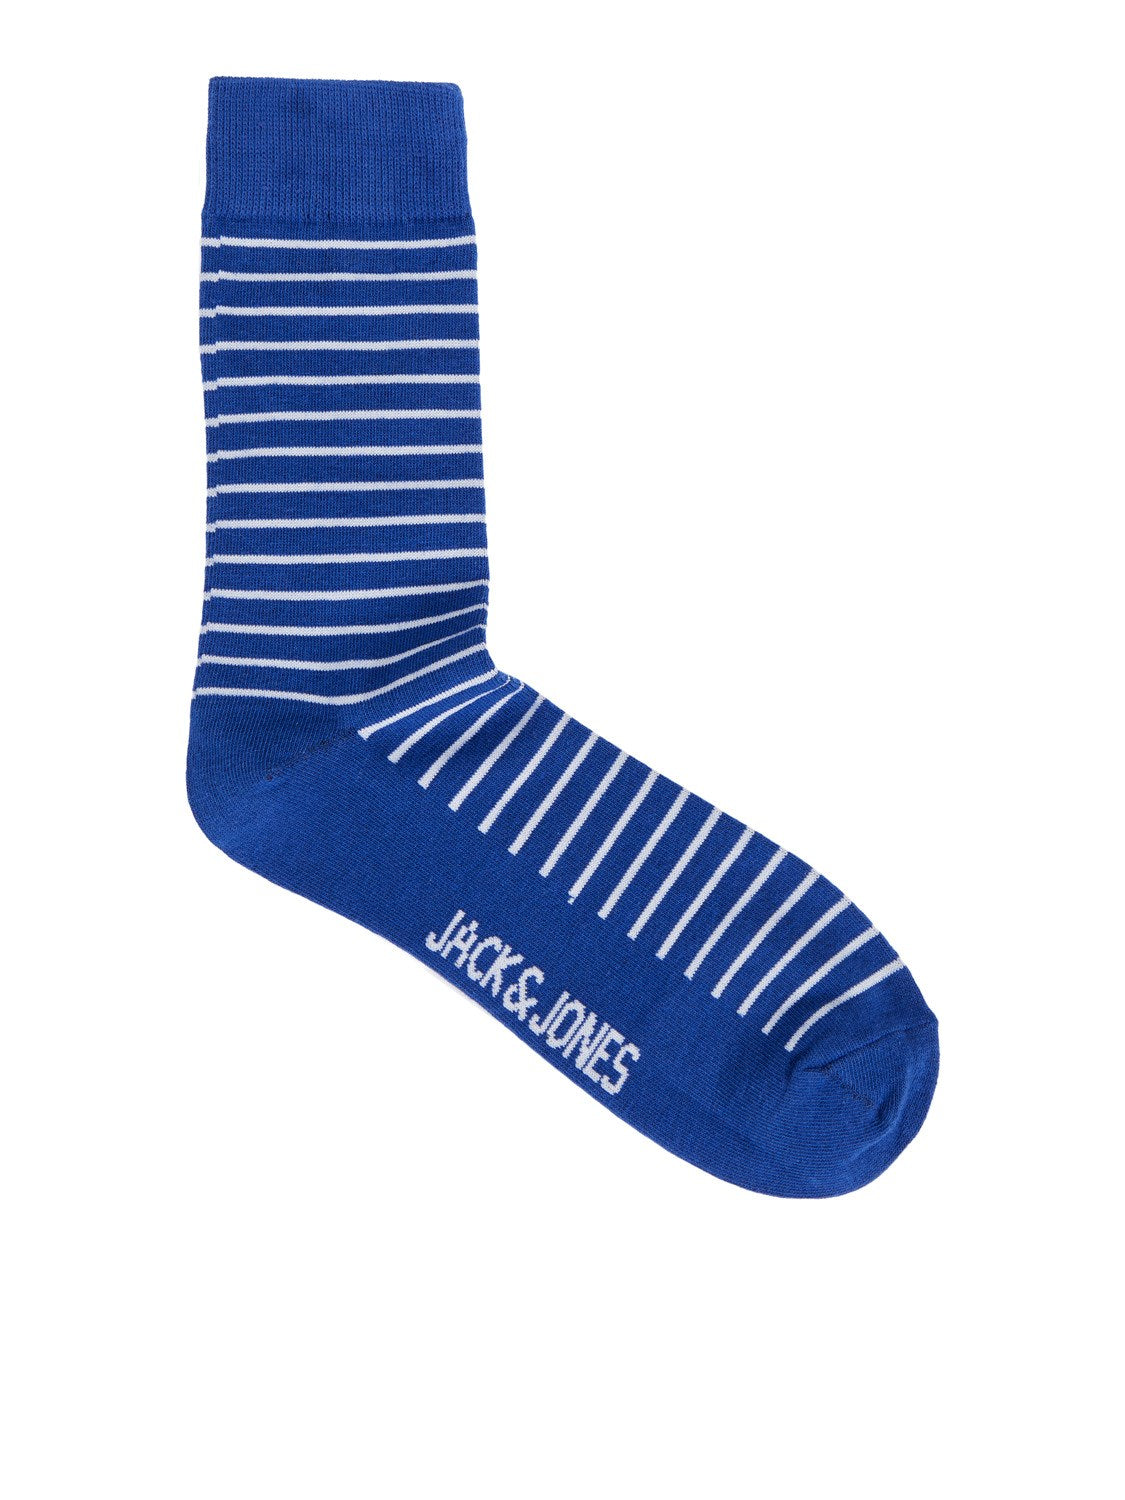 Nautical Blue Stripe Socks